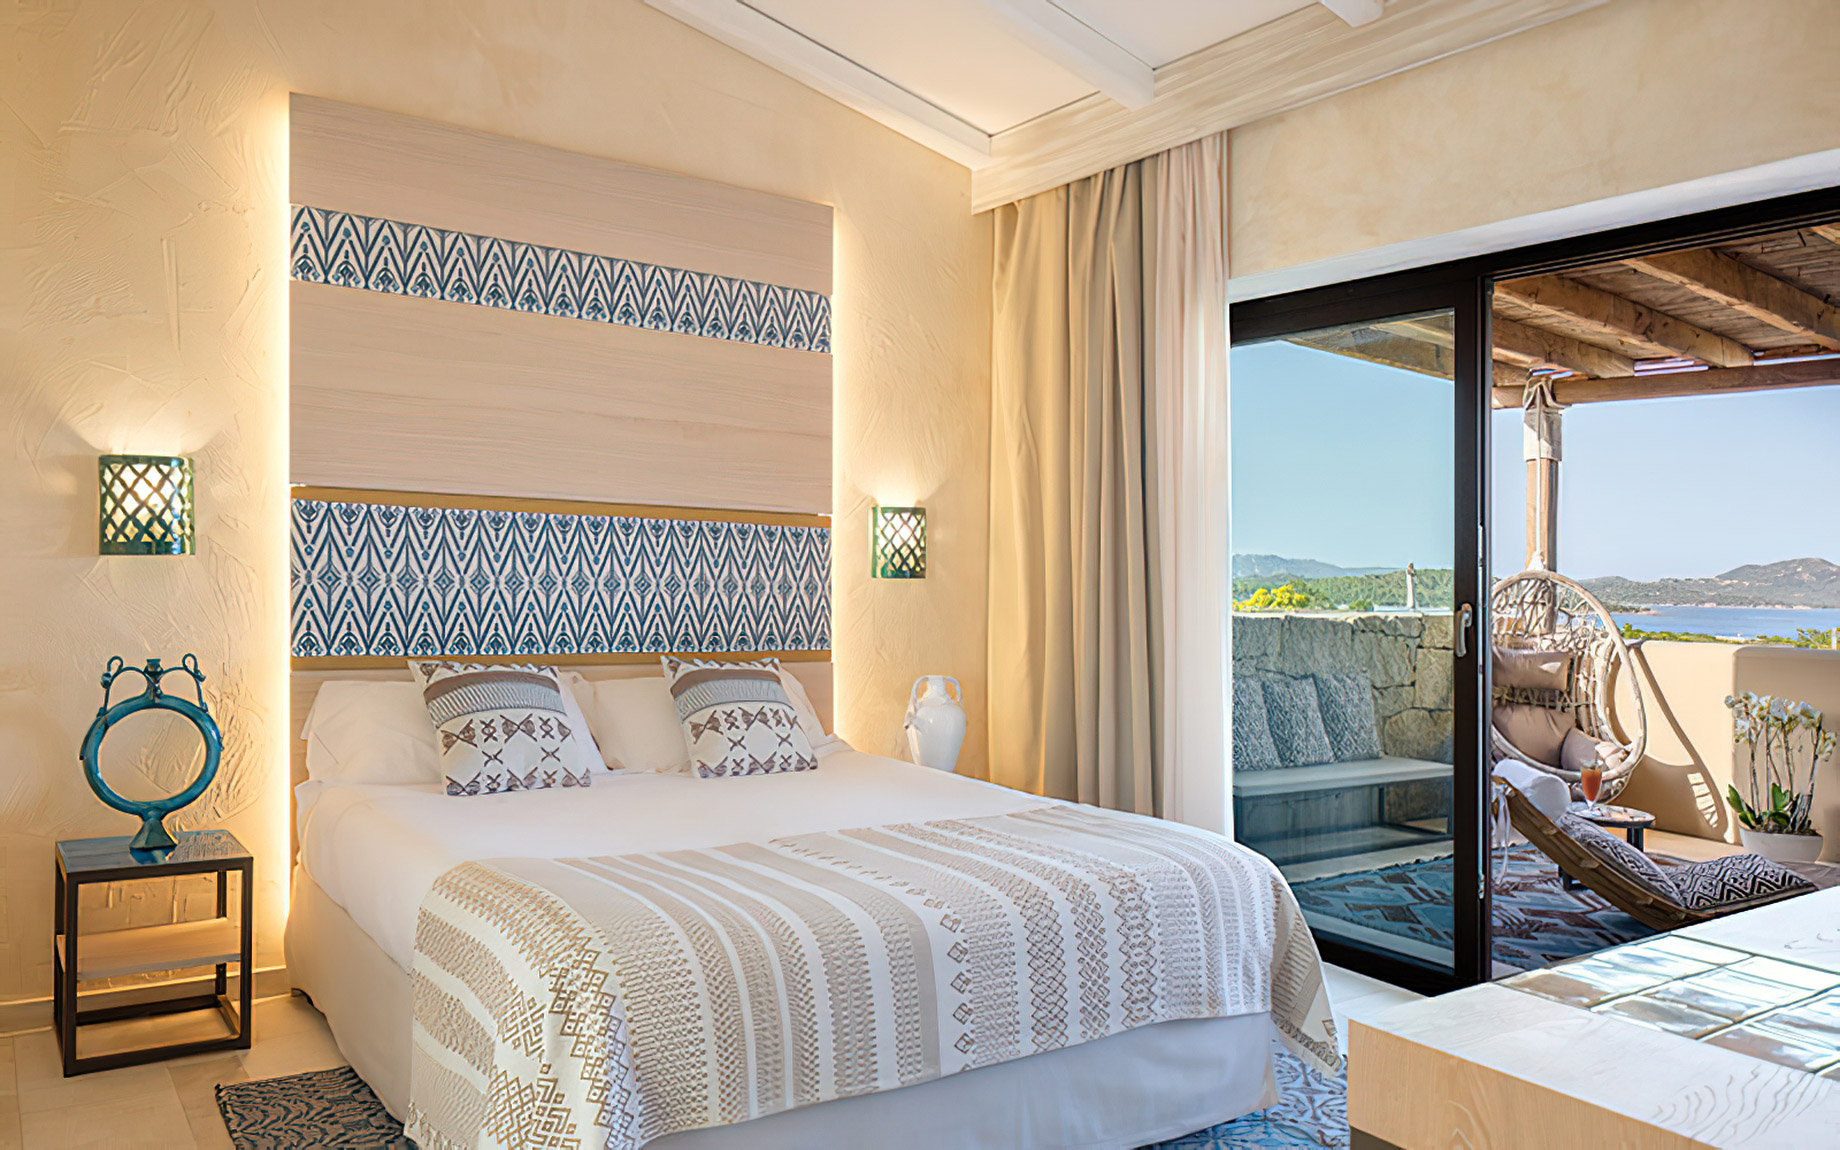 Baglioni Resort Sardinia - San Teodoro, Sardegna, Italy - Maddalena Suite Bedroom